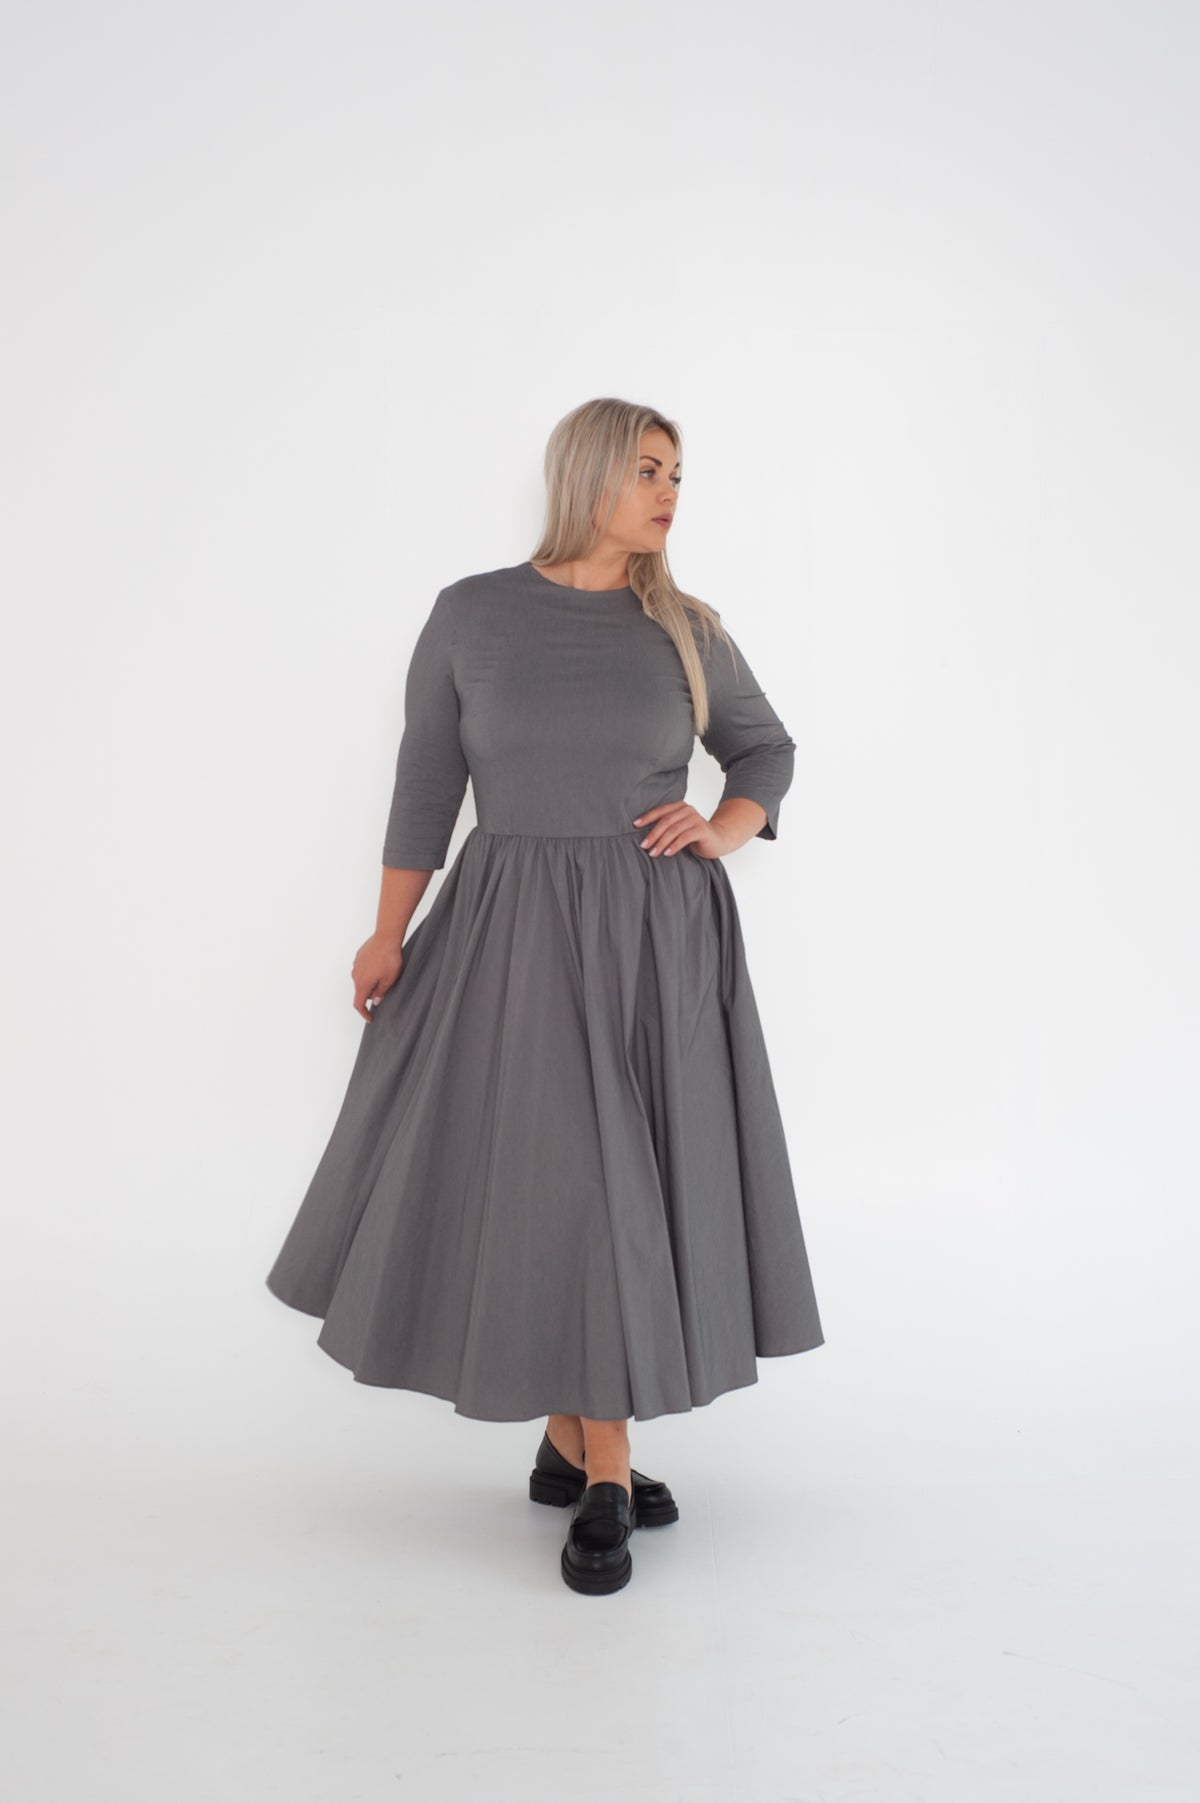 Classy midi deep grey formal dress